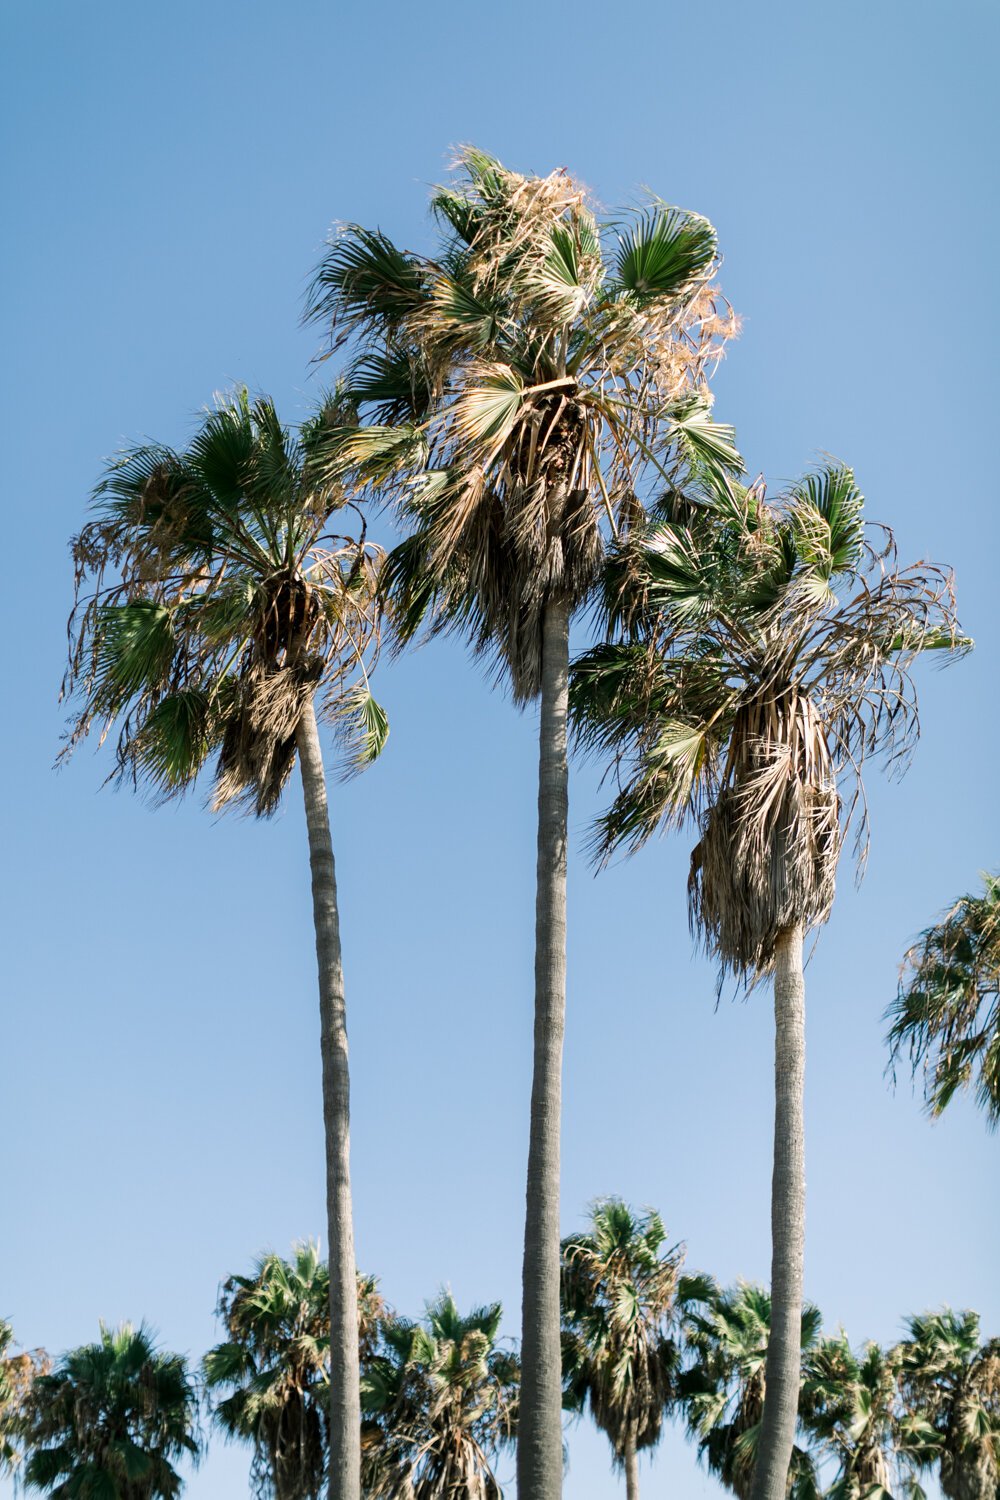 los angeles photographer- Venice Beach Boardwalk